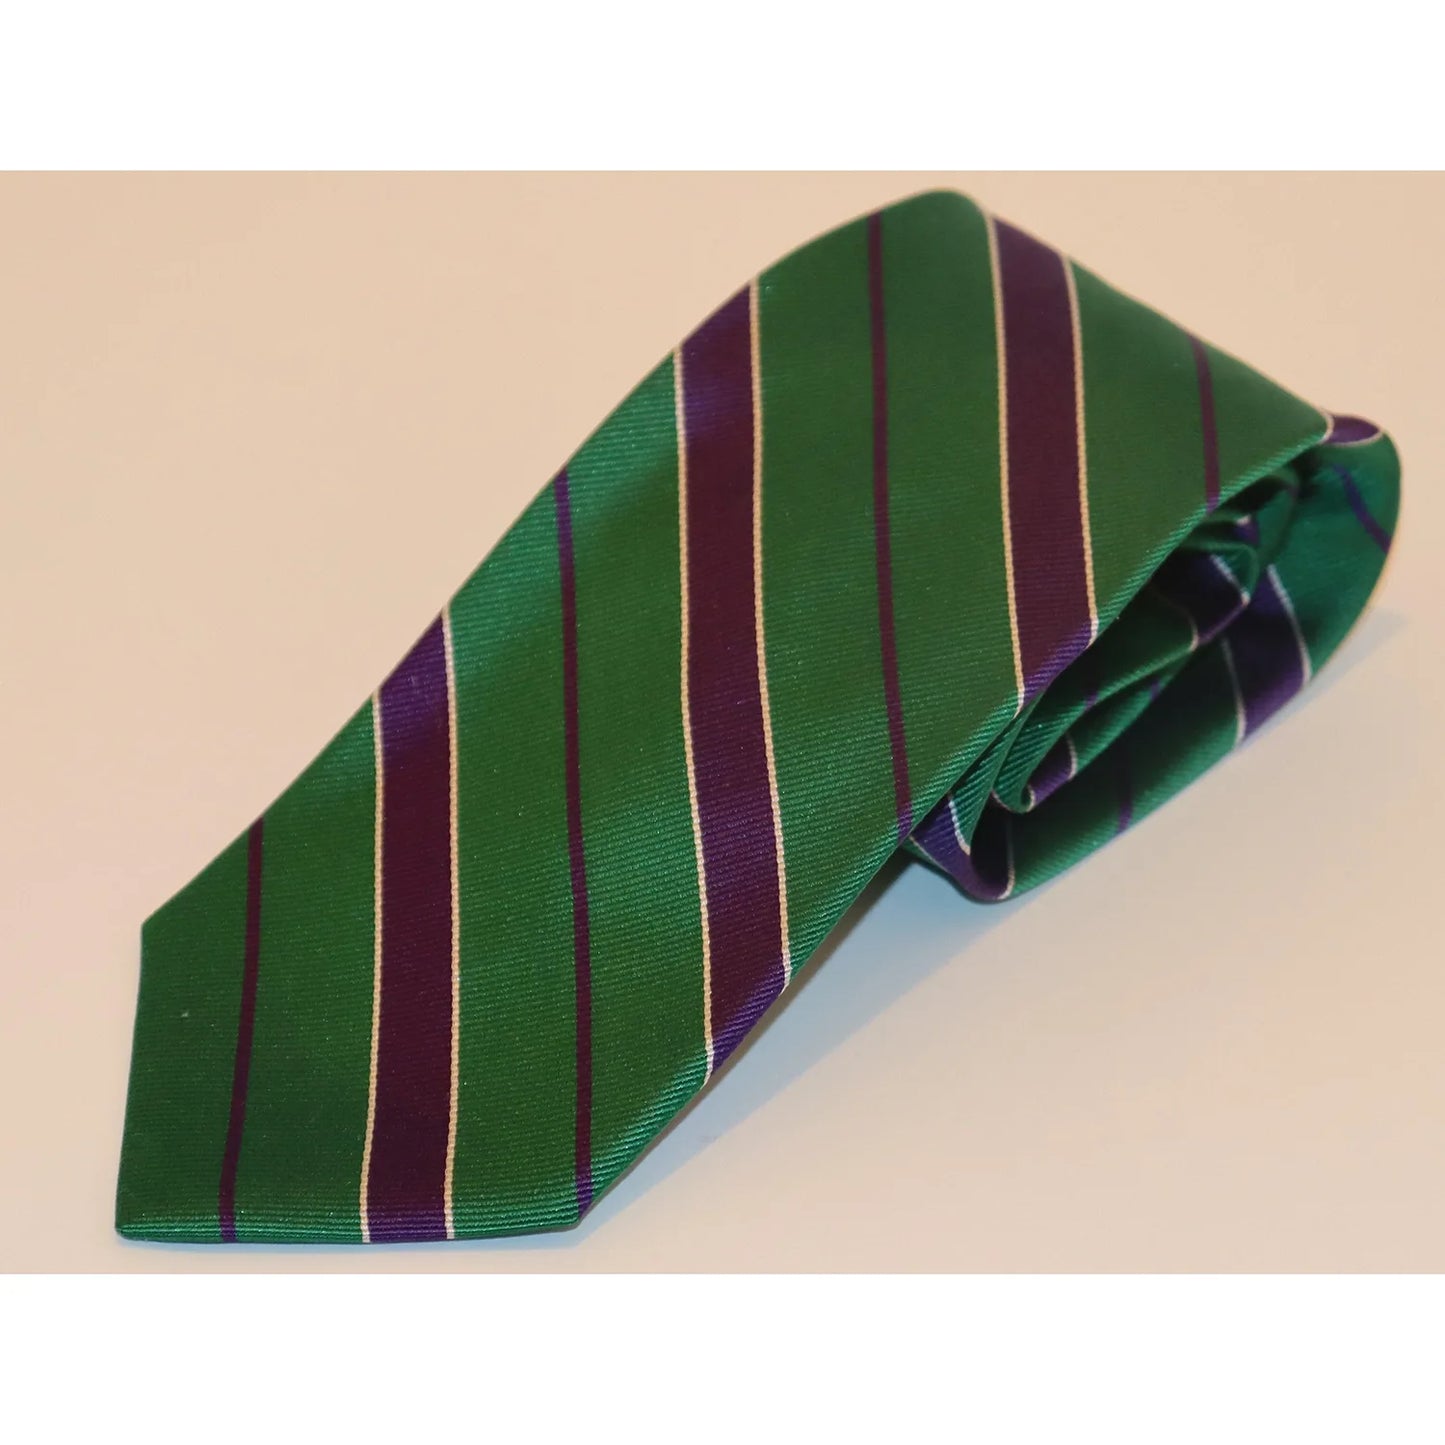 R. Hanauer Tie - Green with Purple Stripe